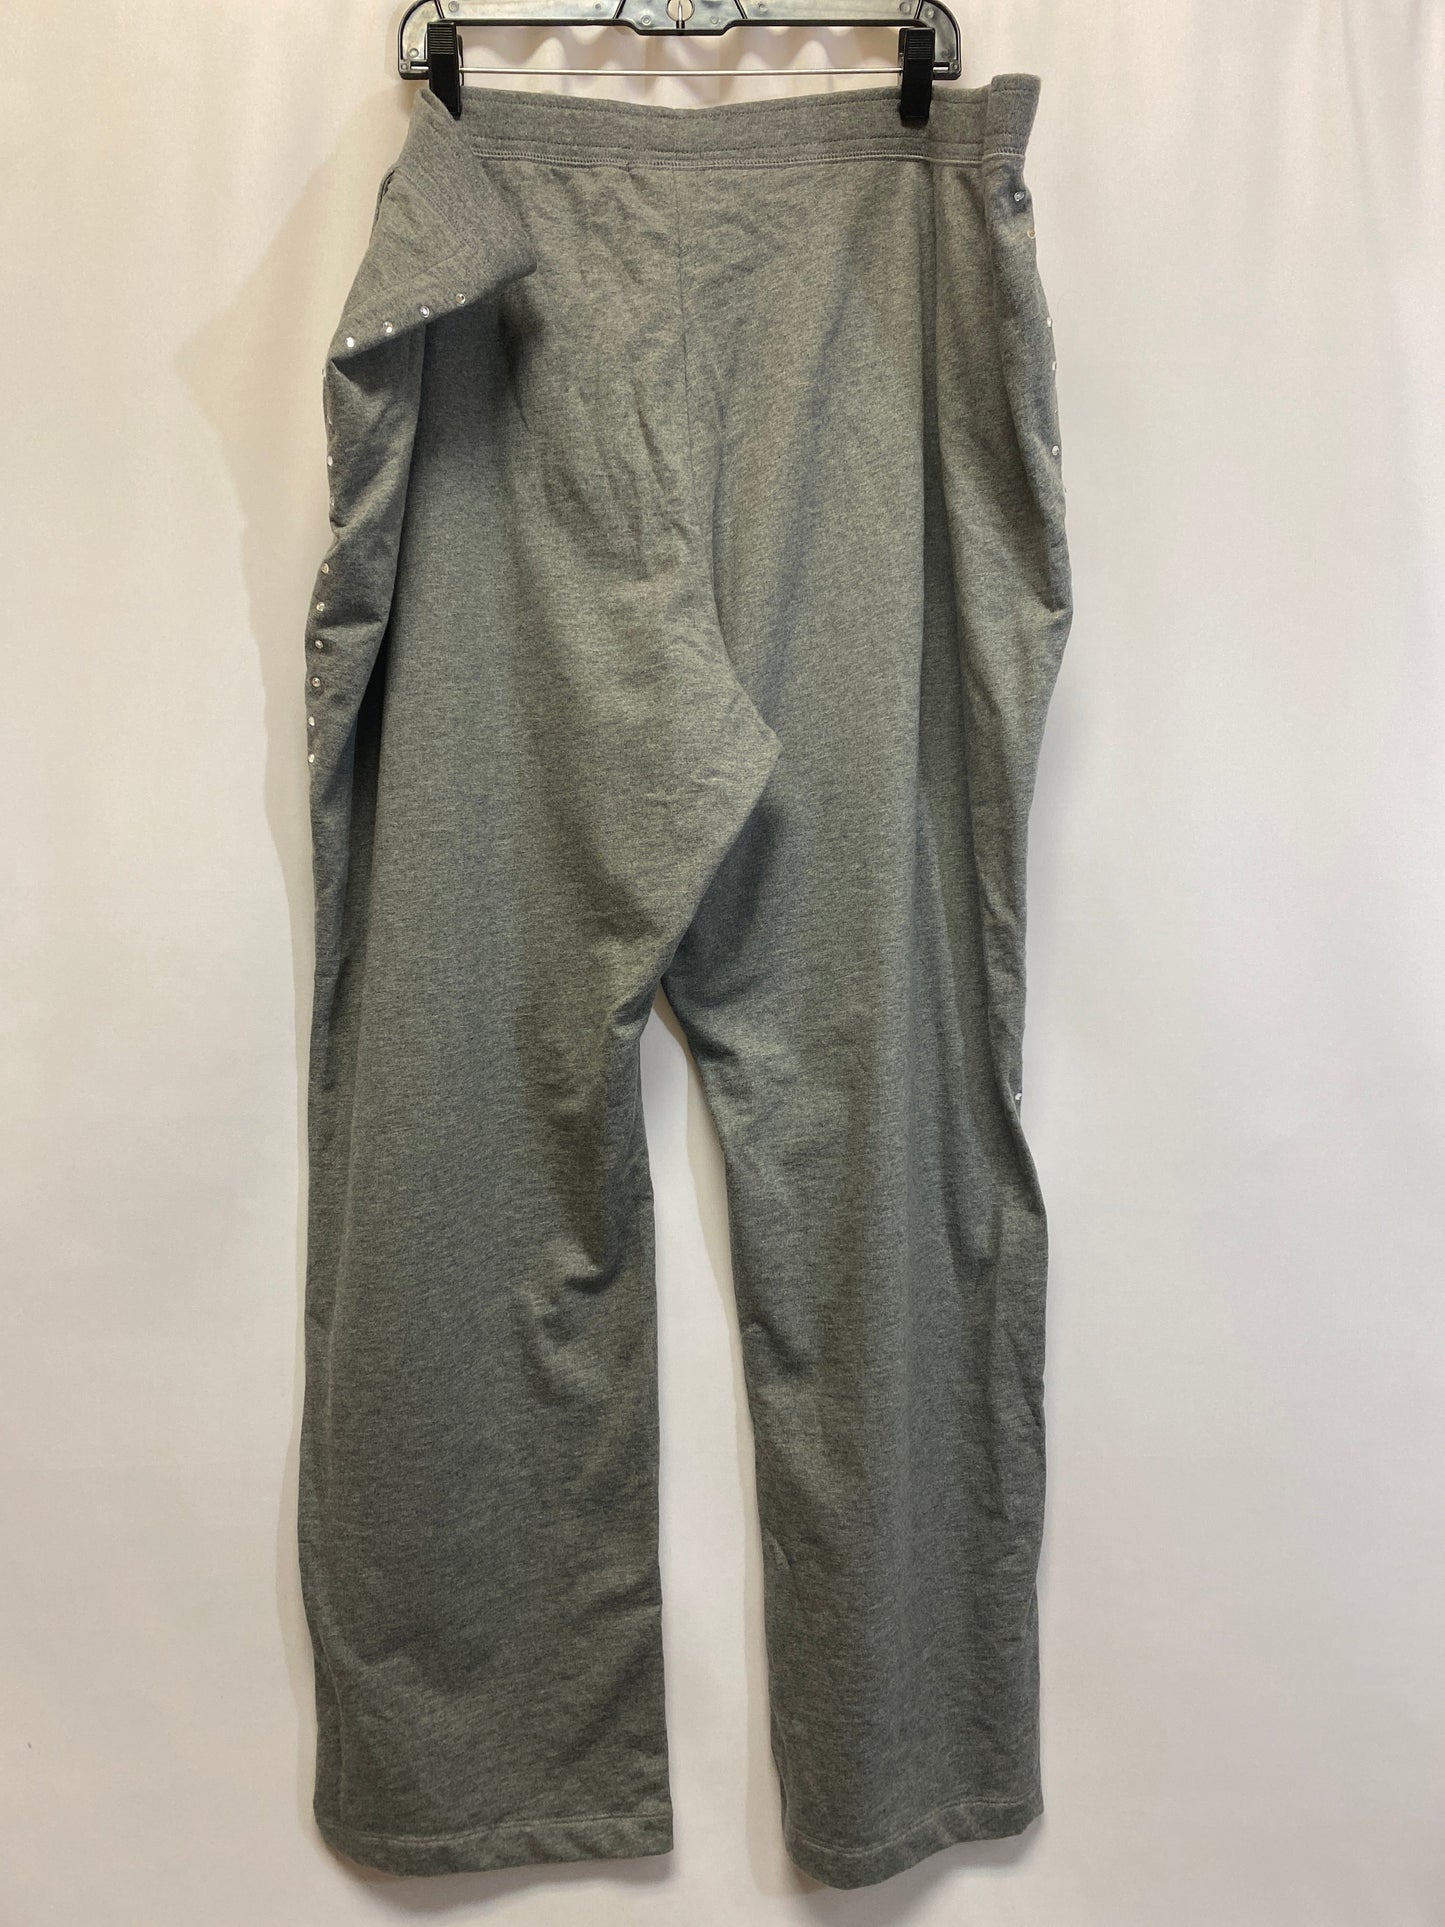 Grey Athletic Pants Jaclyn Smith, Size 3x